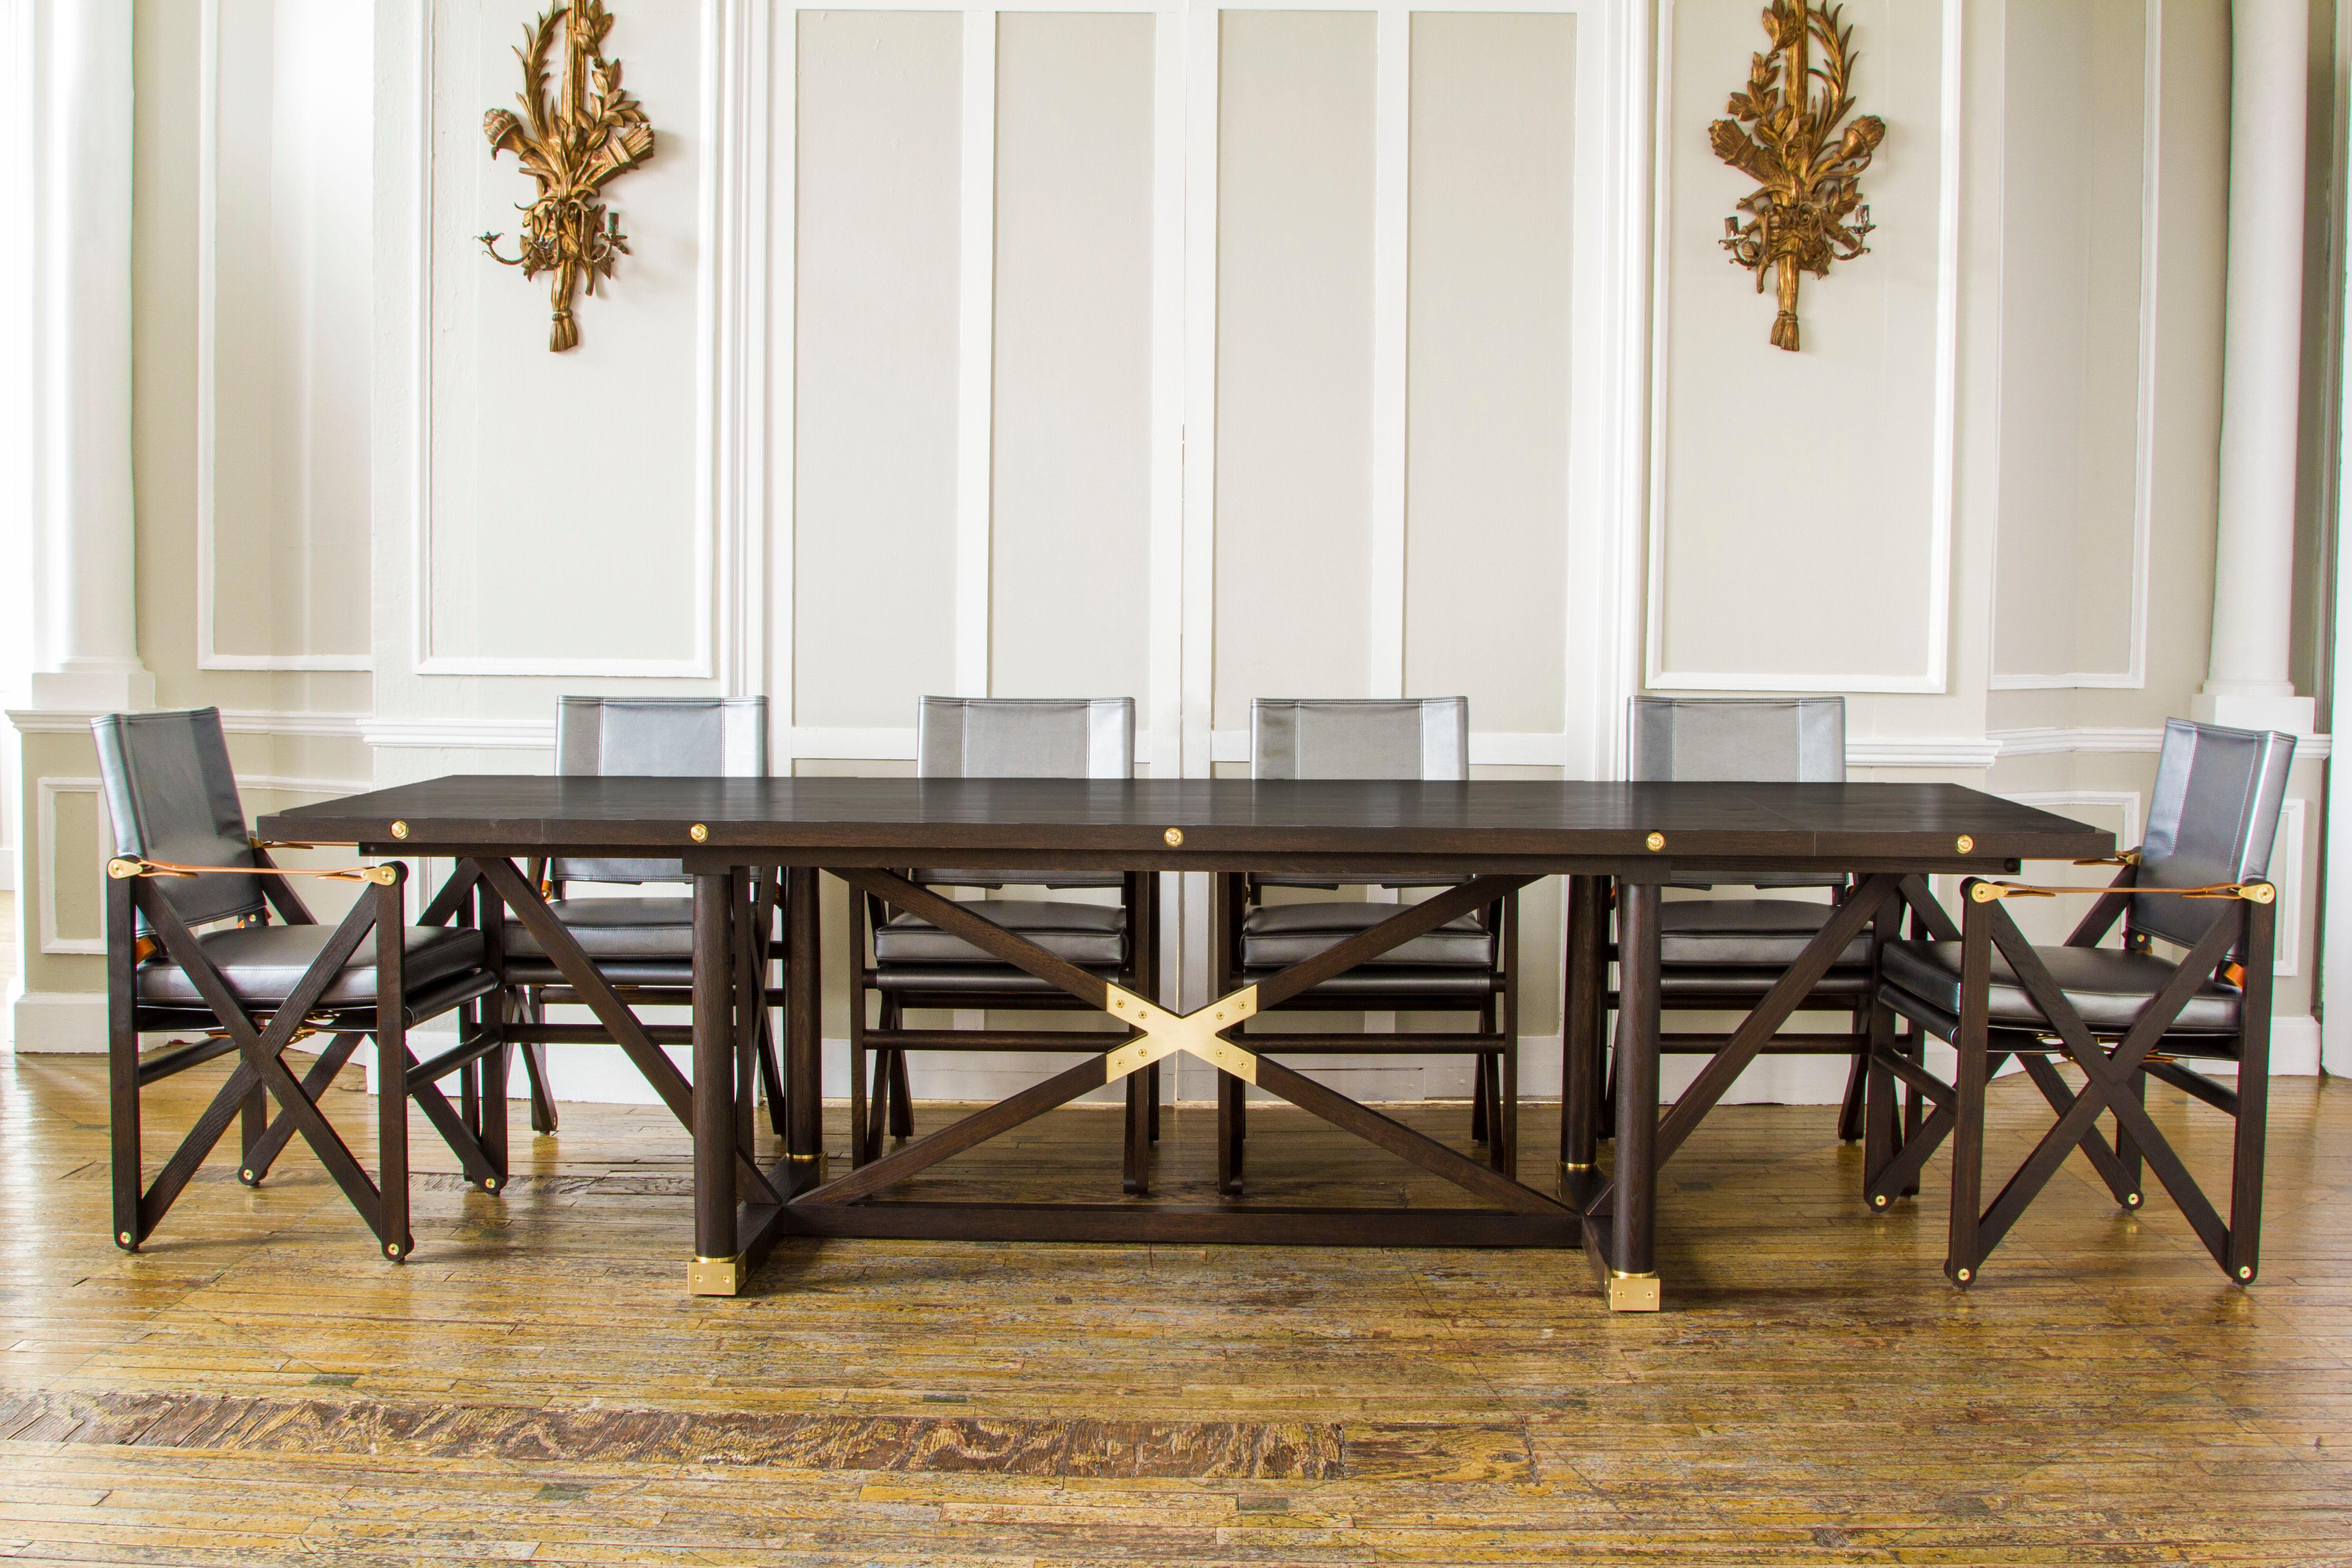 American Carden Table in Ebonized White Oak - handcrafted by Richard Wrightman Design